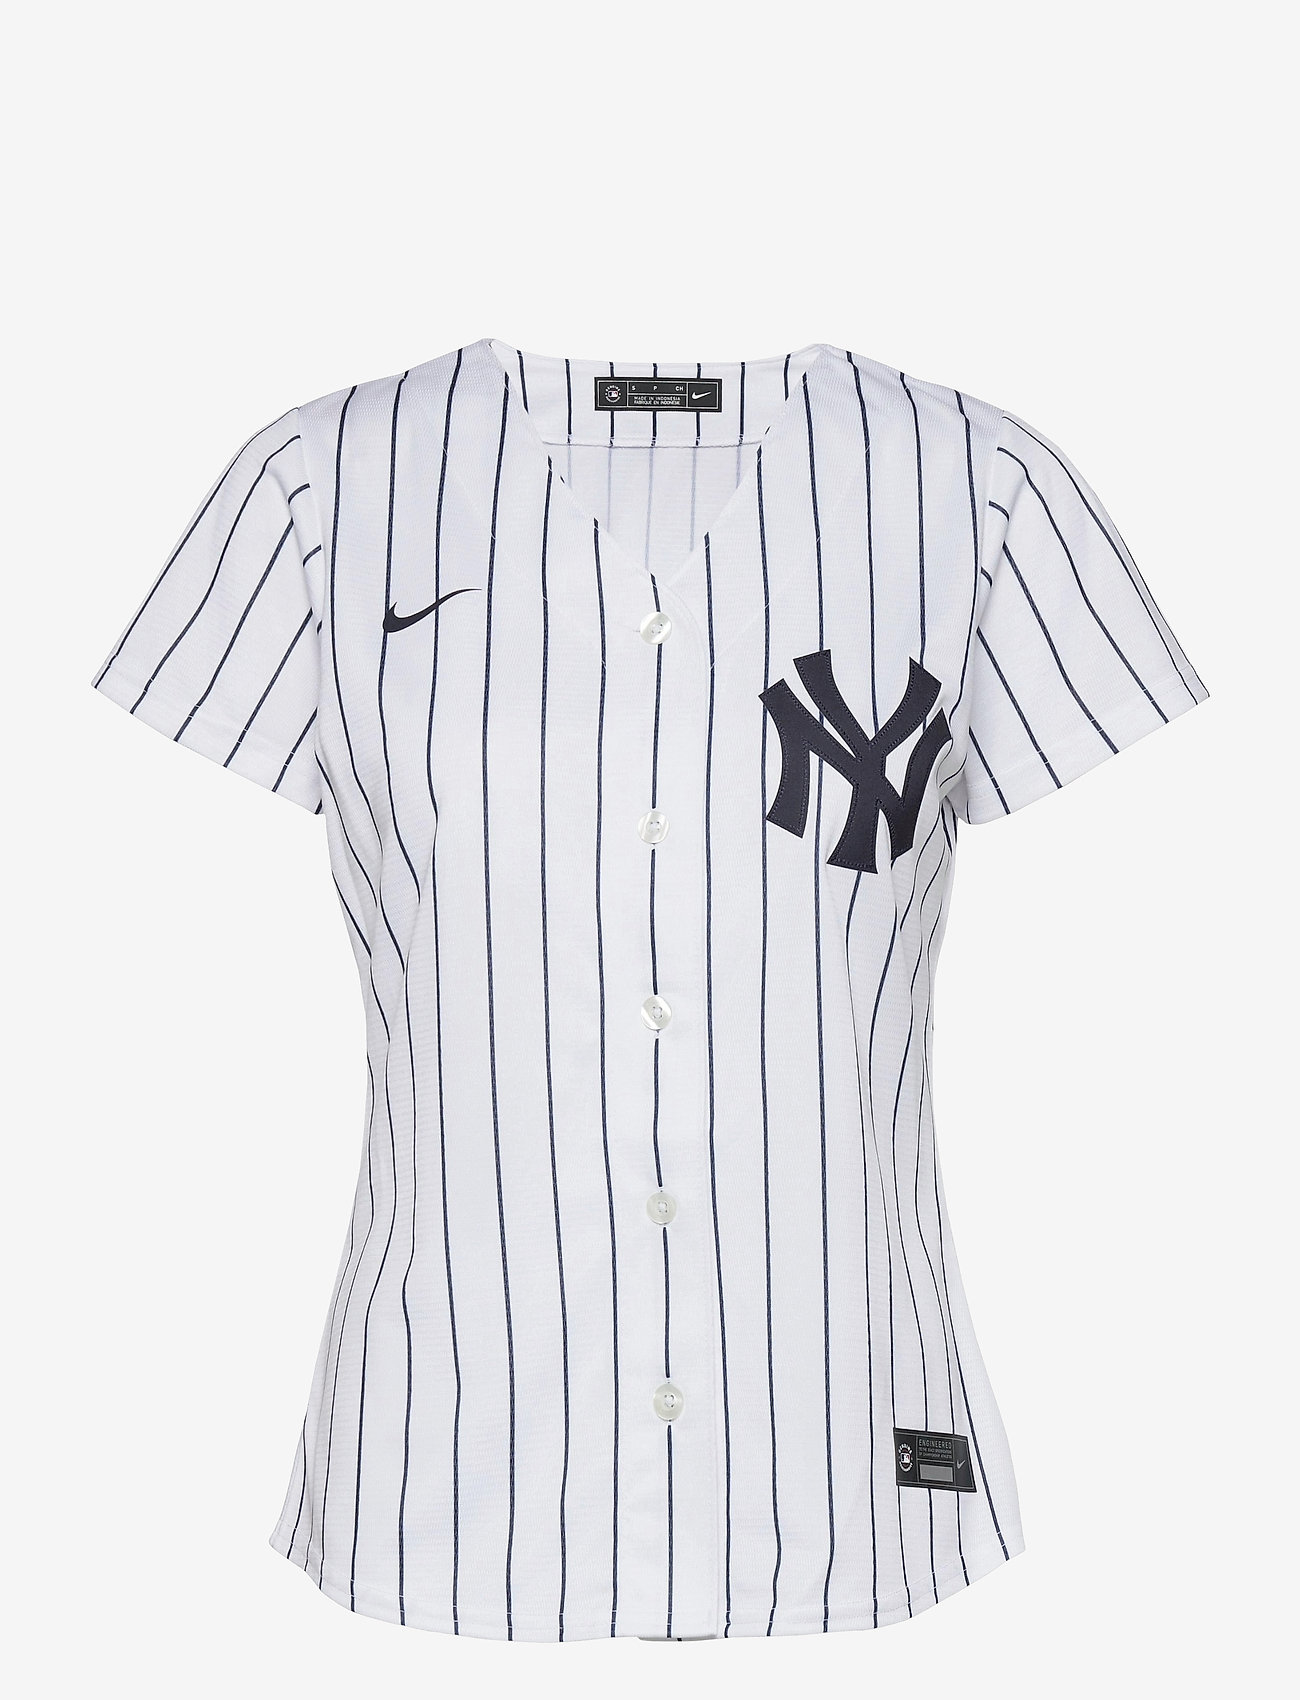 Nike Fan Gear New York Yankees Nike Official Replica Home Jersey T Shirts 